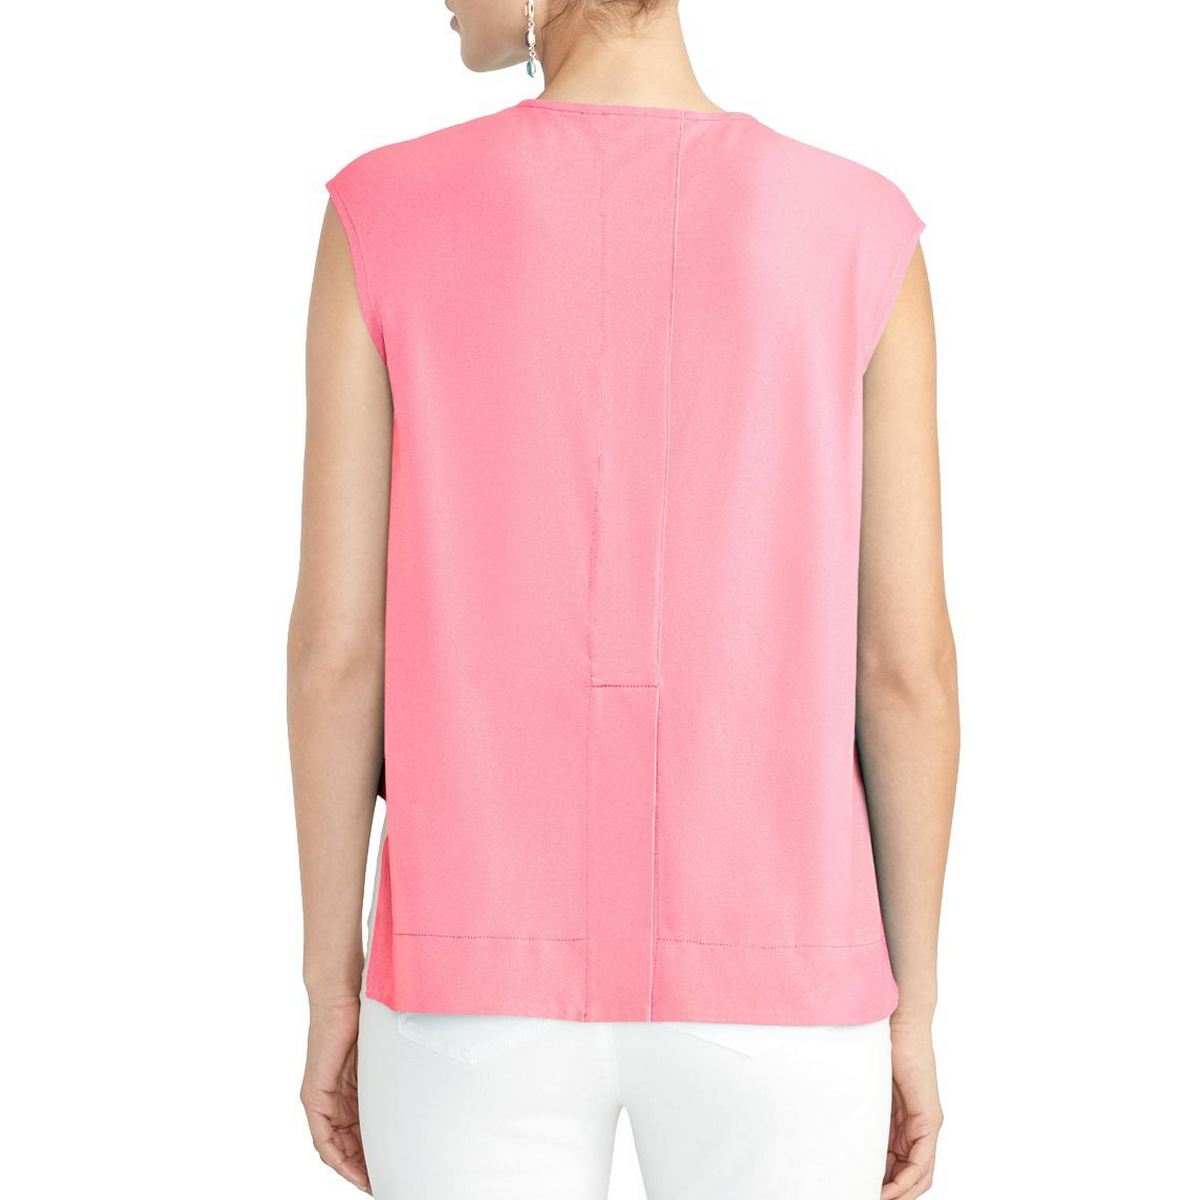 RACHEL ROY NEW Women/'s Pink Asymmetrical Crew Neck Crop Casual Shirt Top TEDO